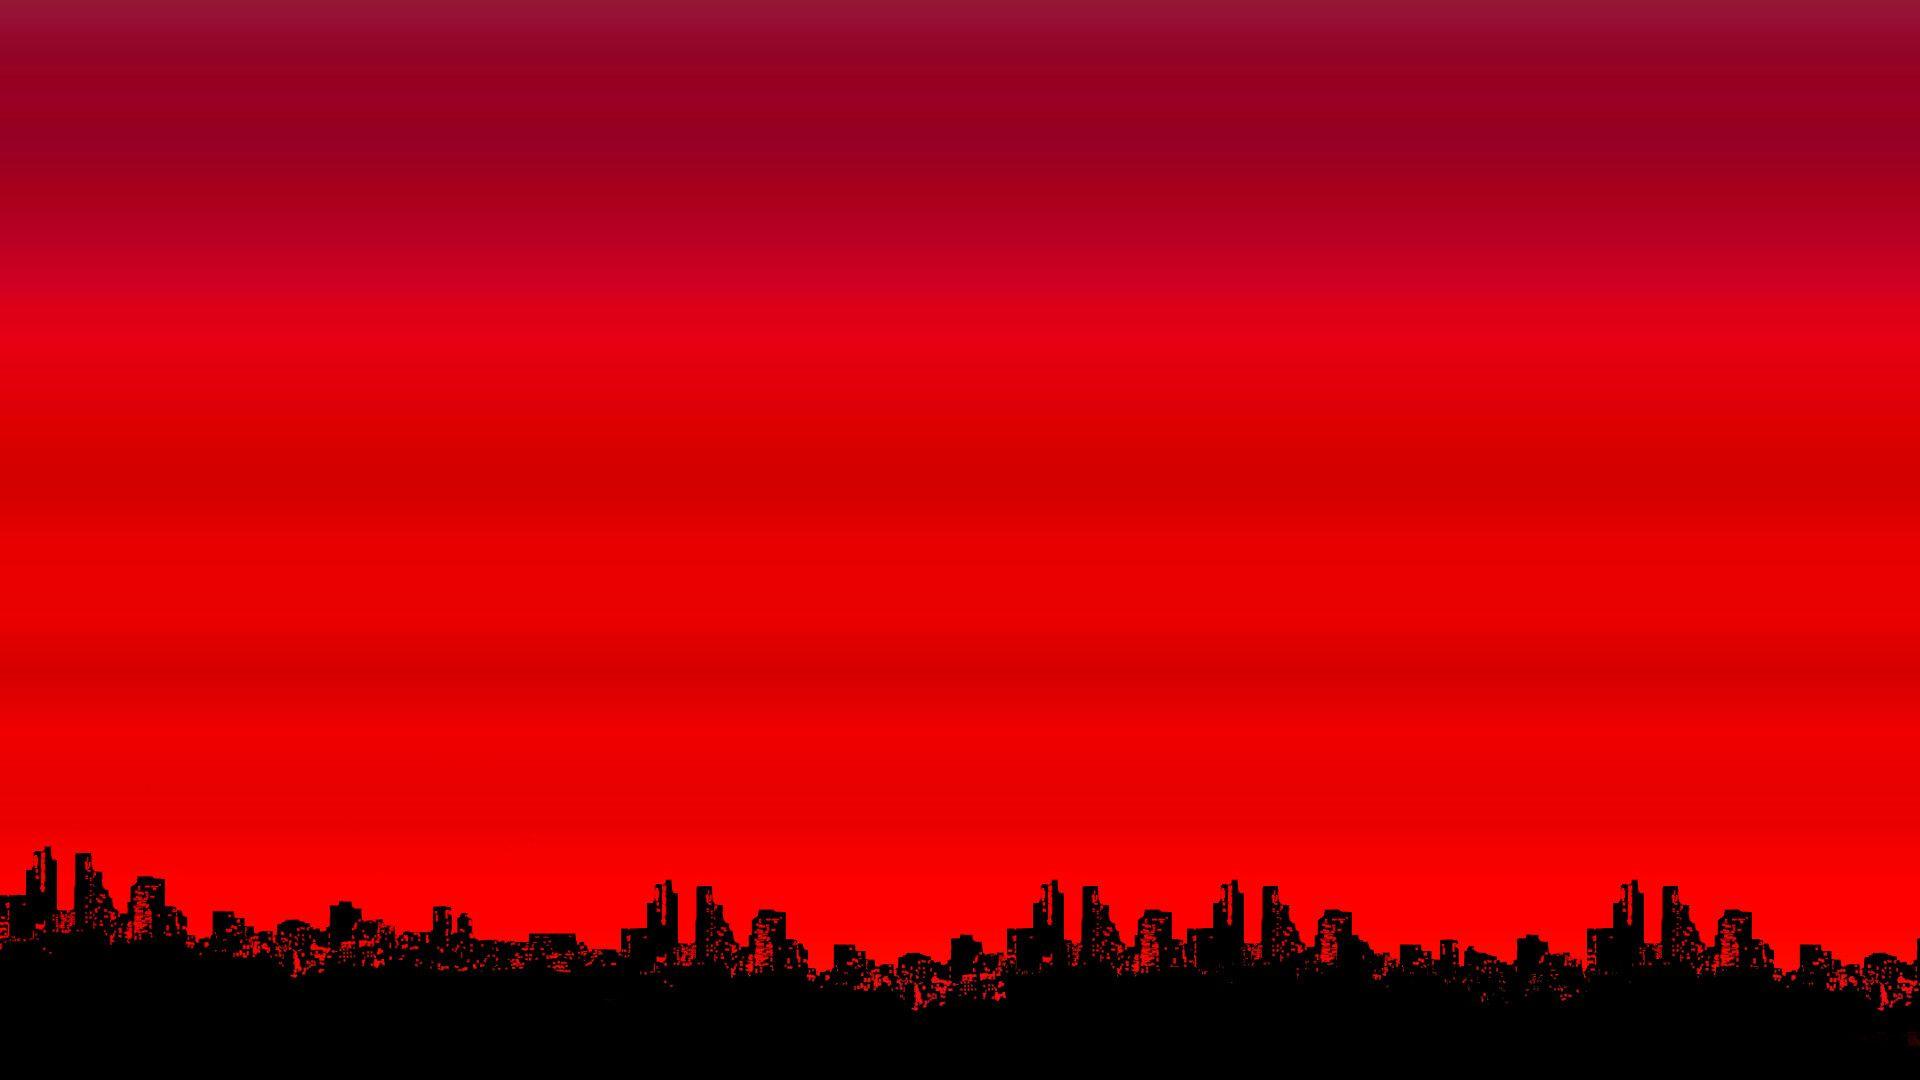 Dark Red Aesthetic Wallpapers - Top Free Dark Red ...